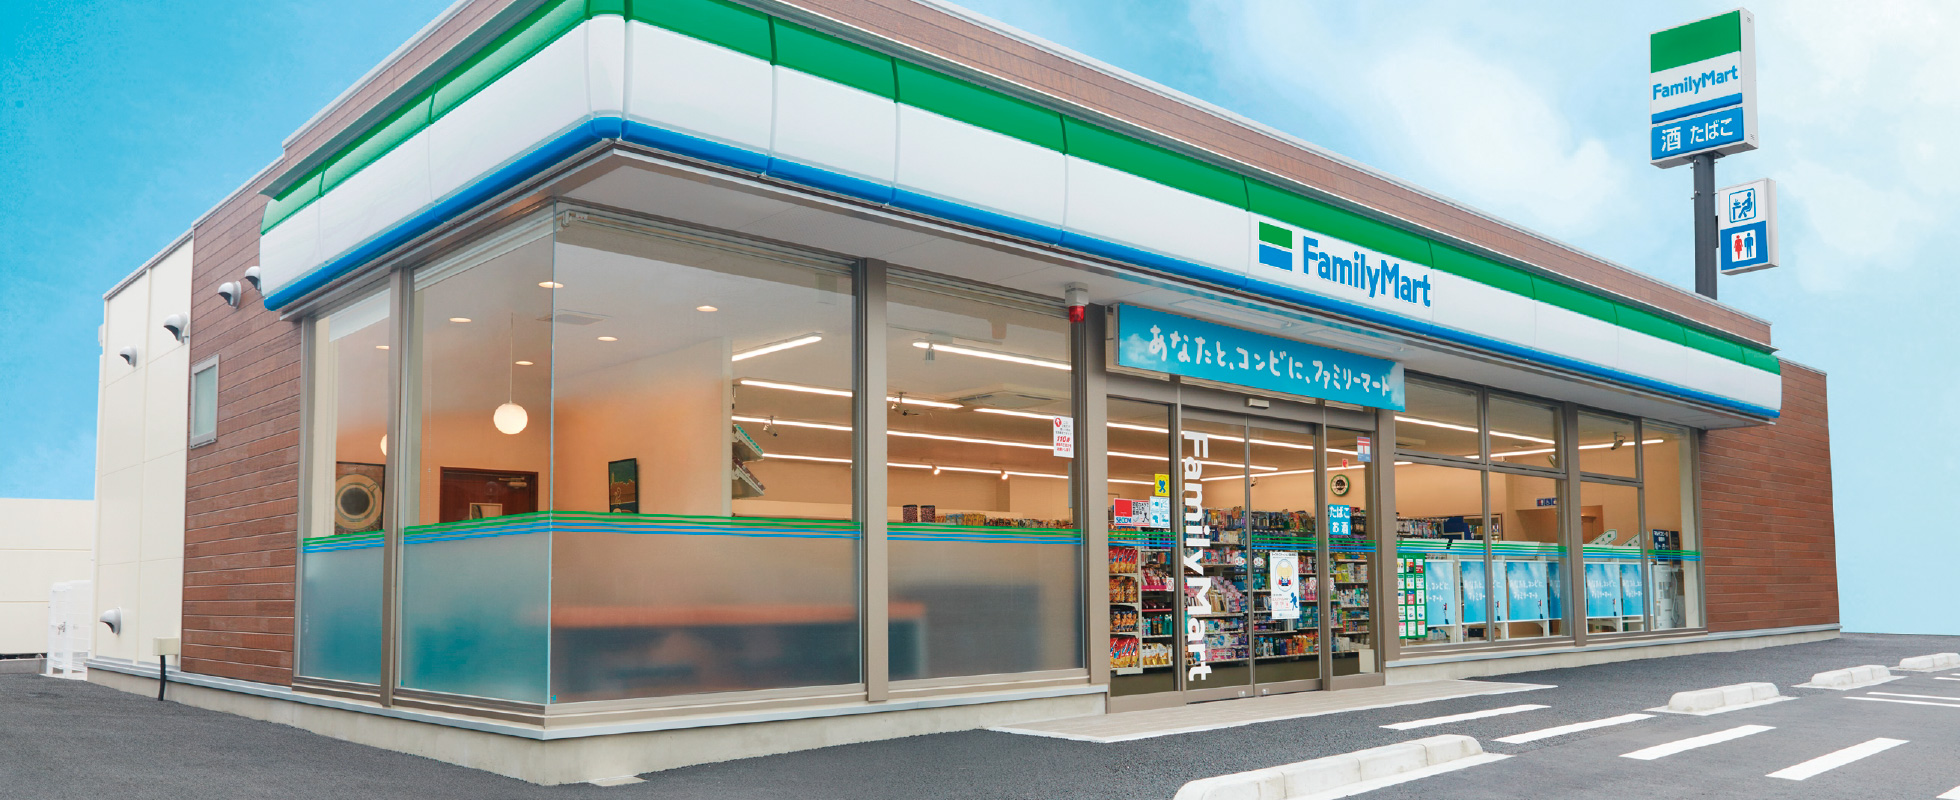 Family mart. Family Mart магазин. АЗС японской сети FAMILYMART. Convenience Store. Family-Mart магазин фото.